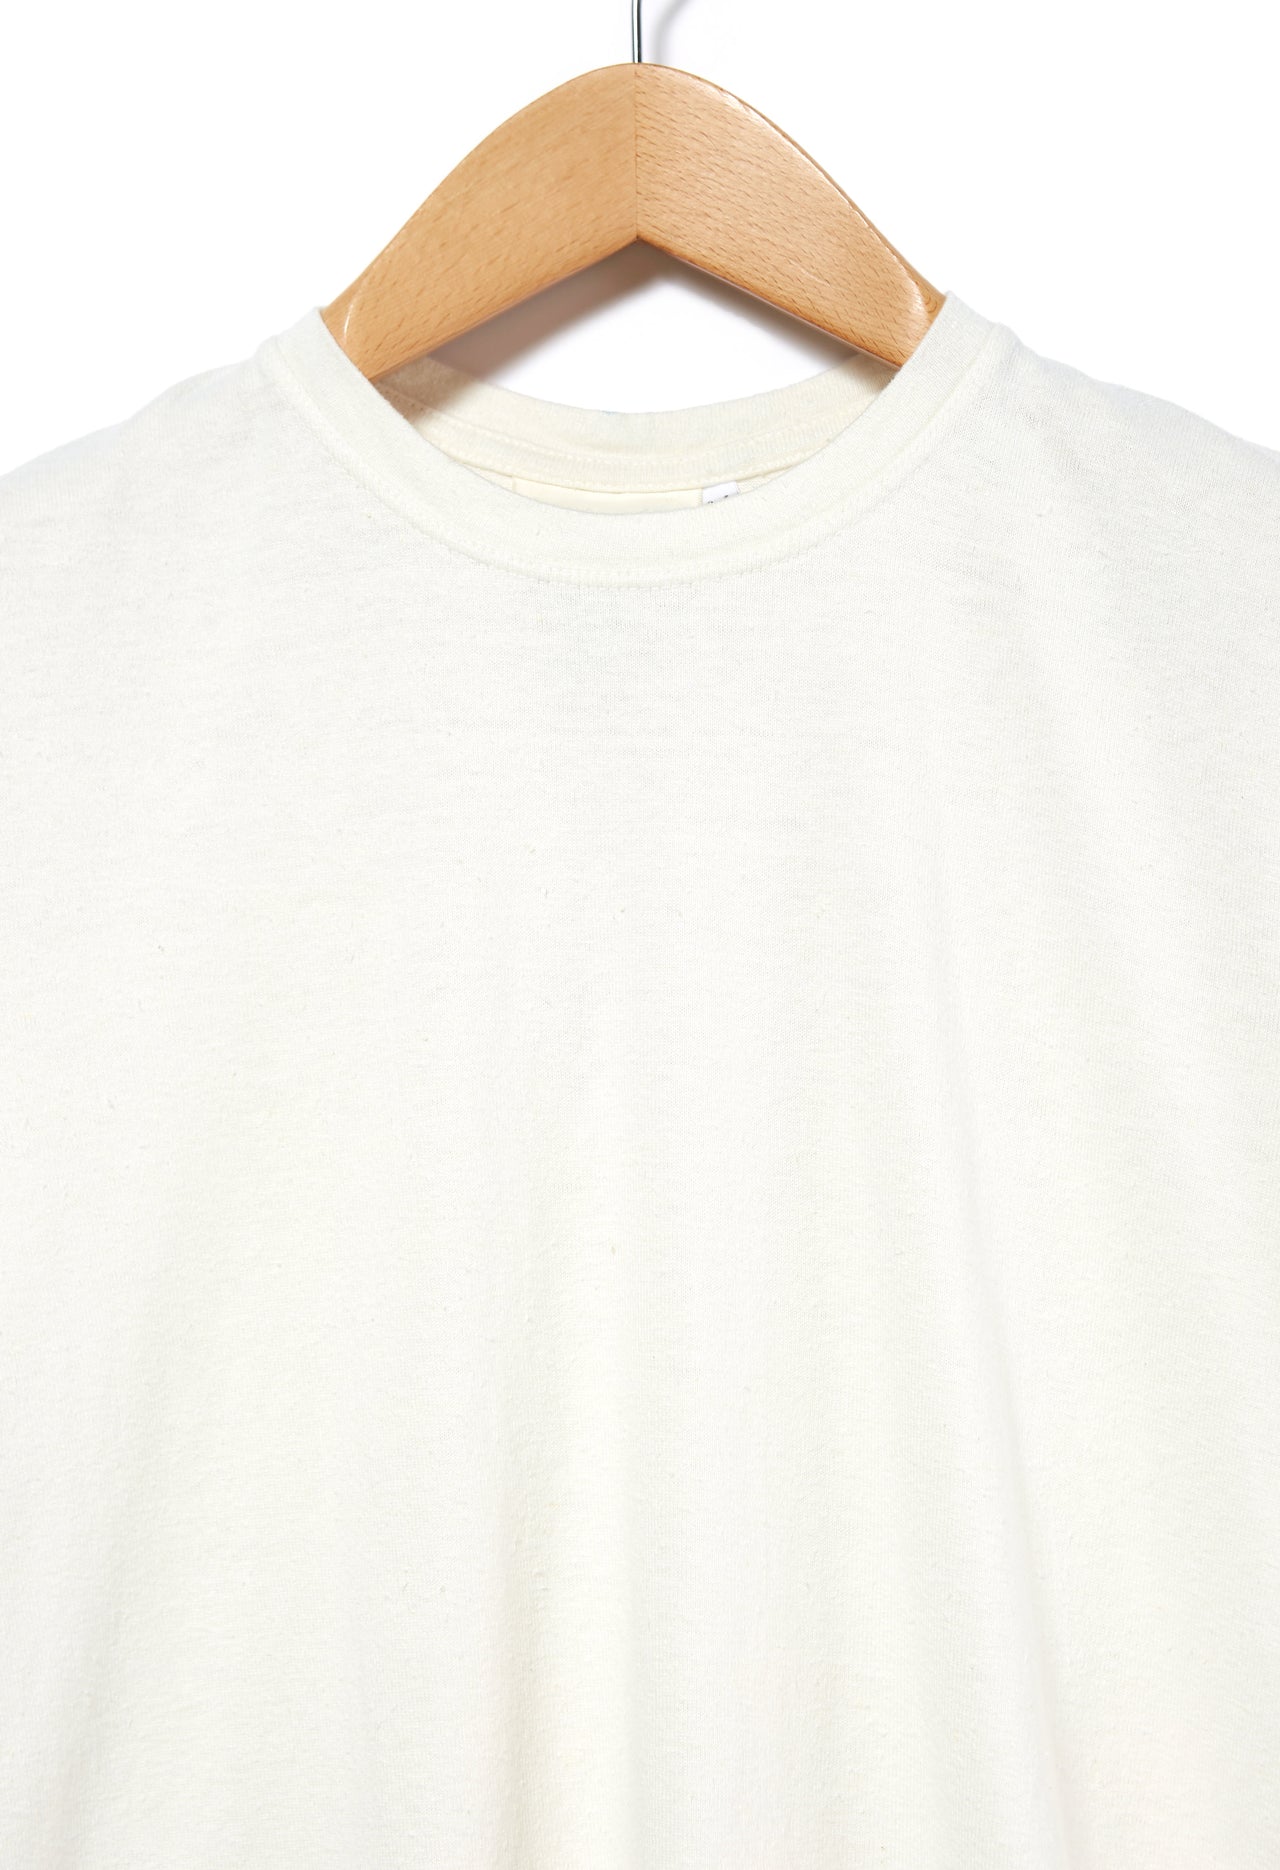 Jungmaven Men's Baja T-Shirt - Washed White